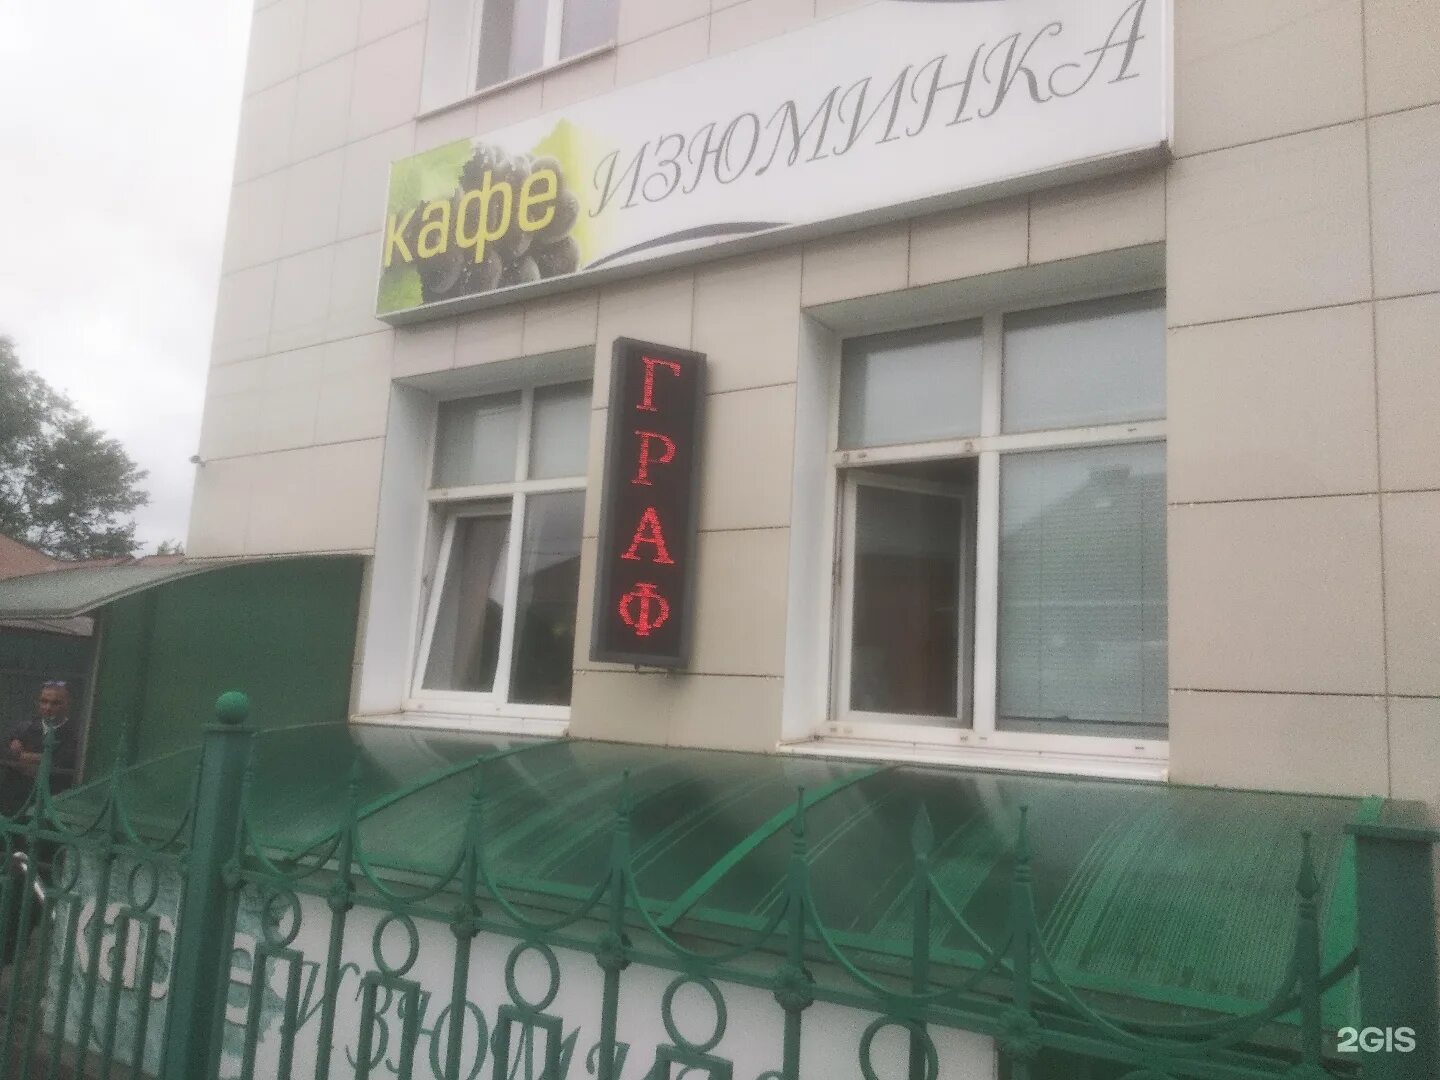 Изюминка, Курск, Суворовская улица. Кафе изюминка Курск. Кафе изюминка Ижевск.